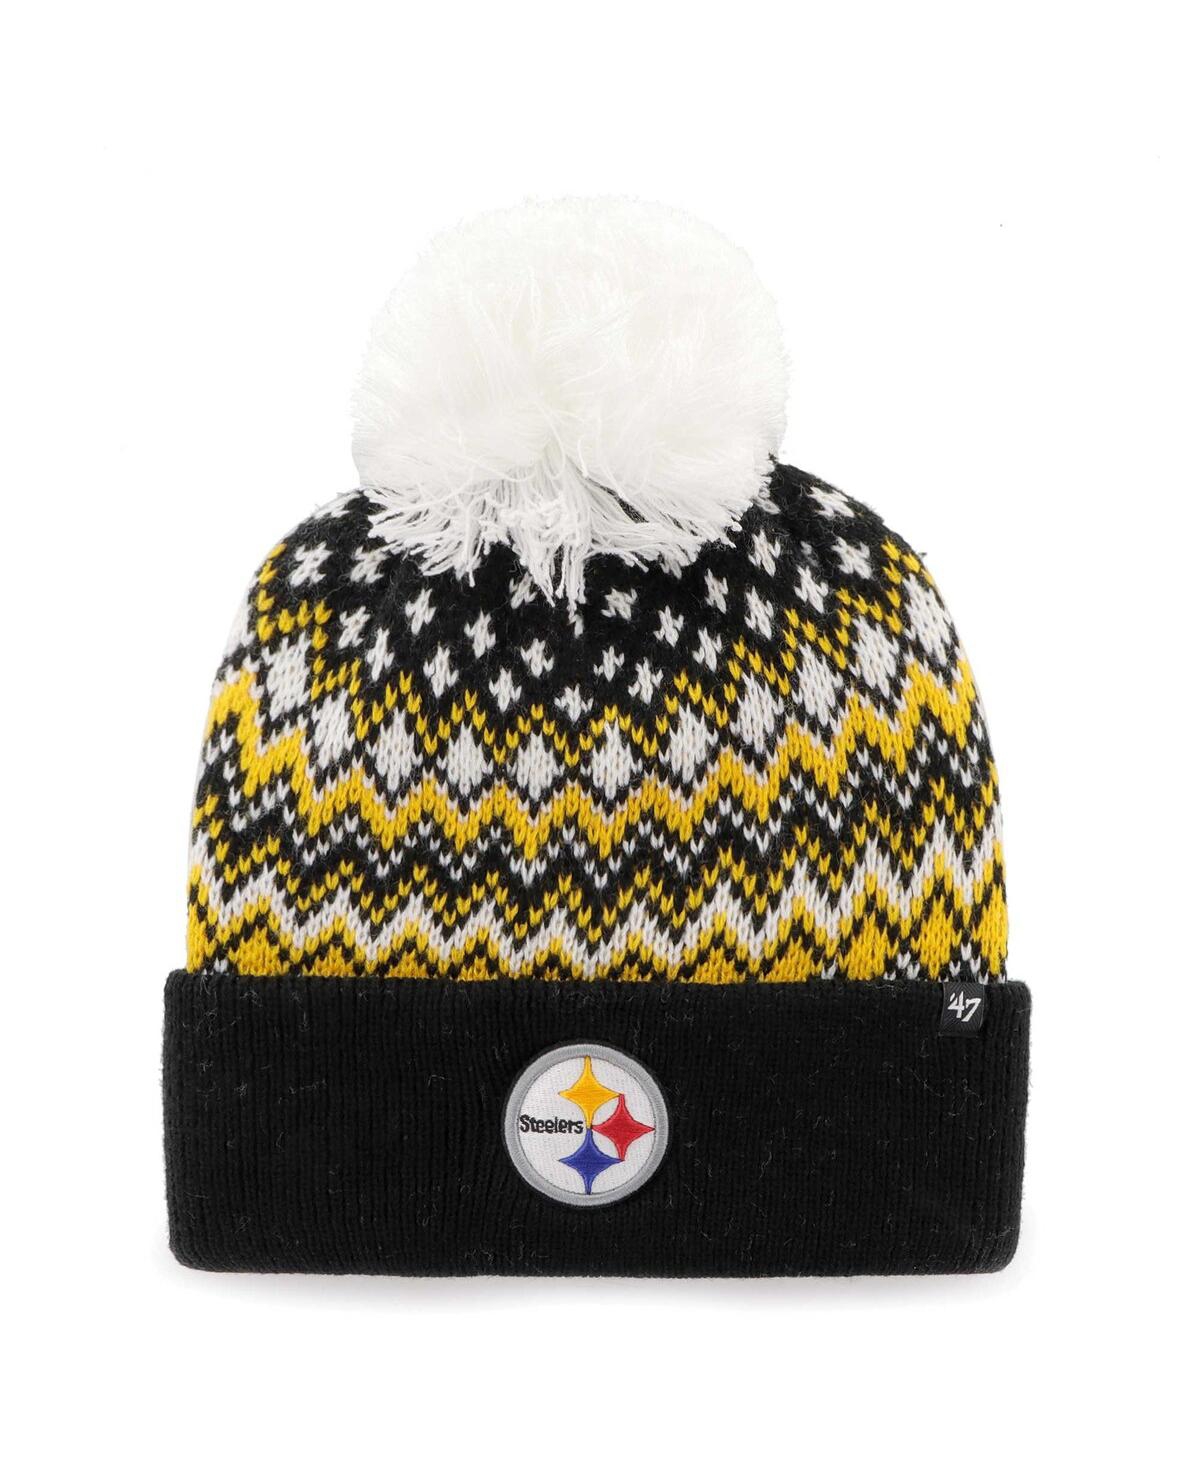 Women's '47 Brand Black Pittsburgh Steelers Elsa Cuffed Knit Hat with Pom - Black